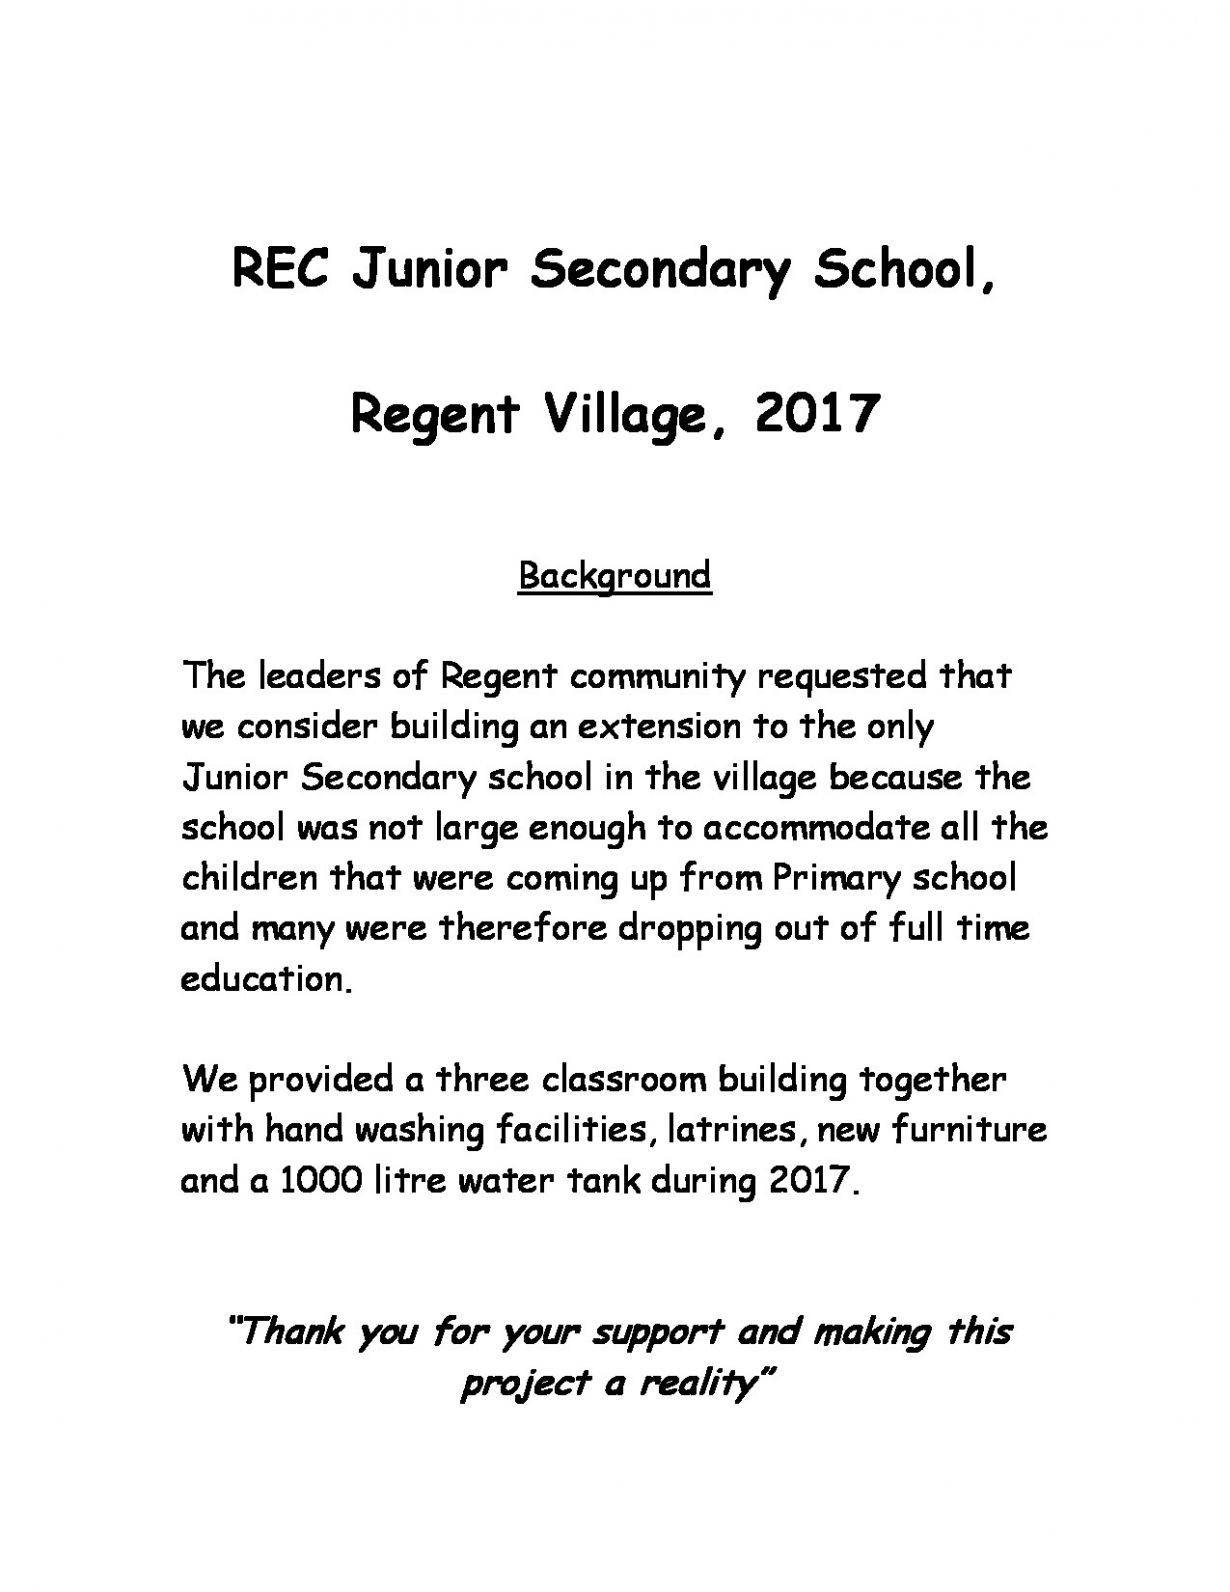 REC Junior Seconday Summary